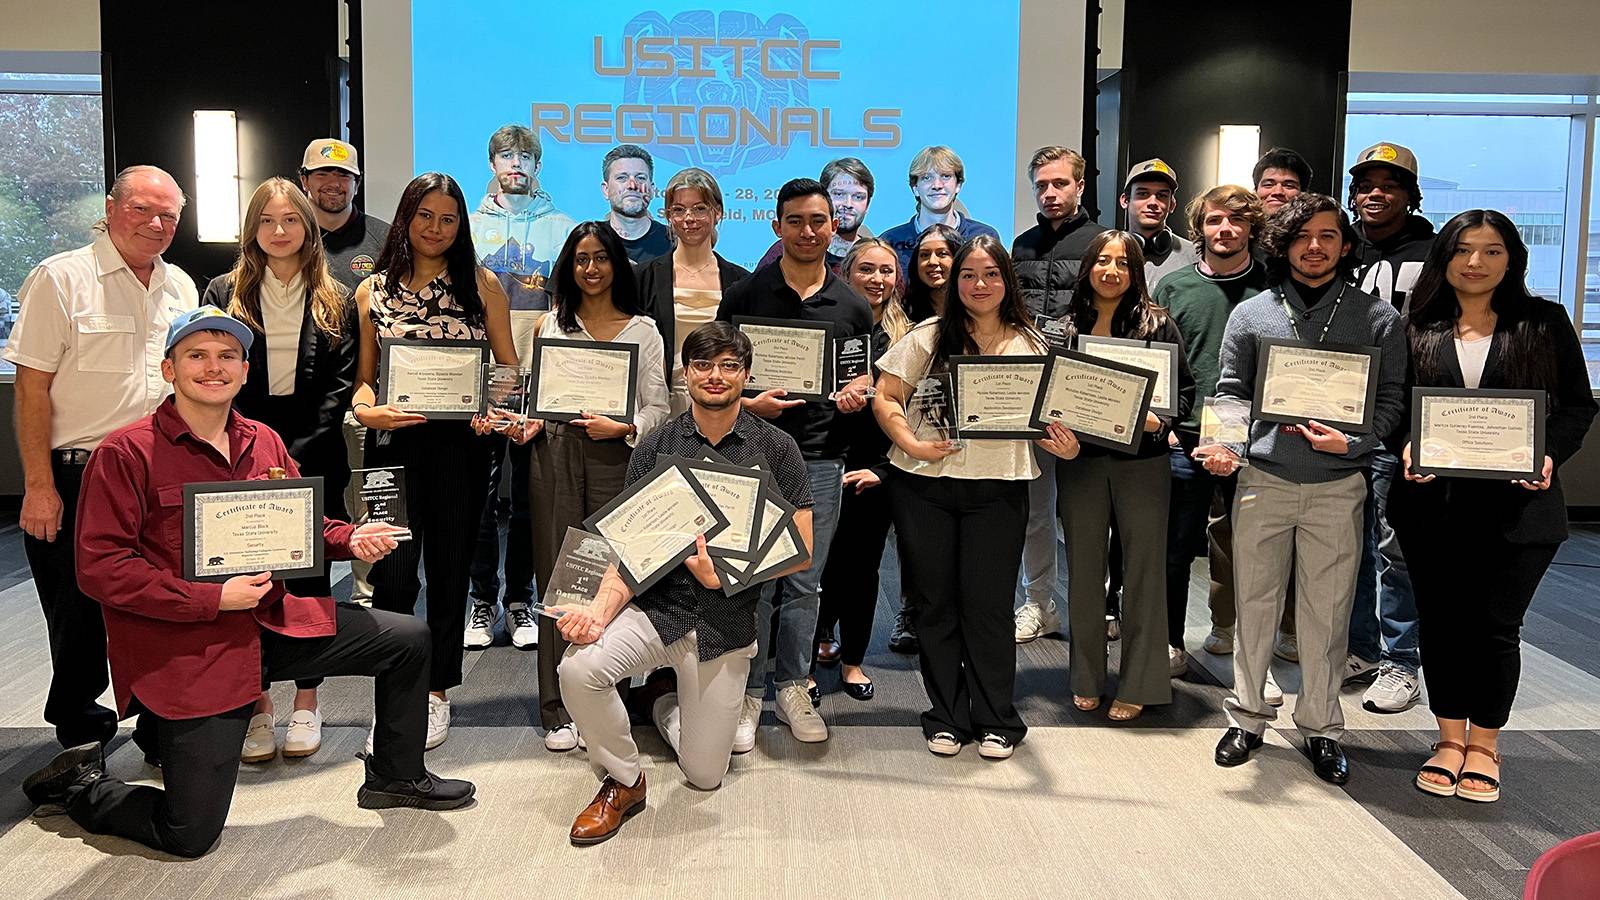 ITSA team with certificates at USITCC Regionals